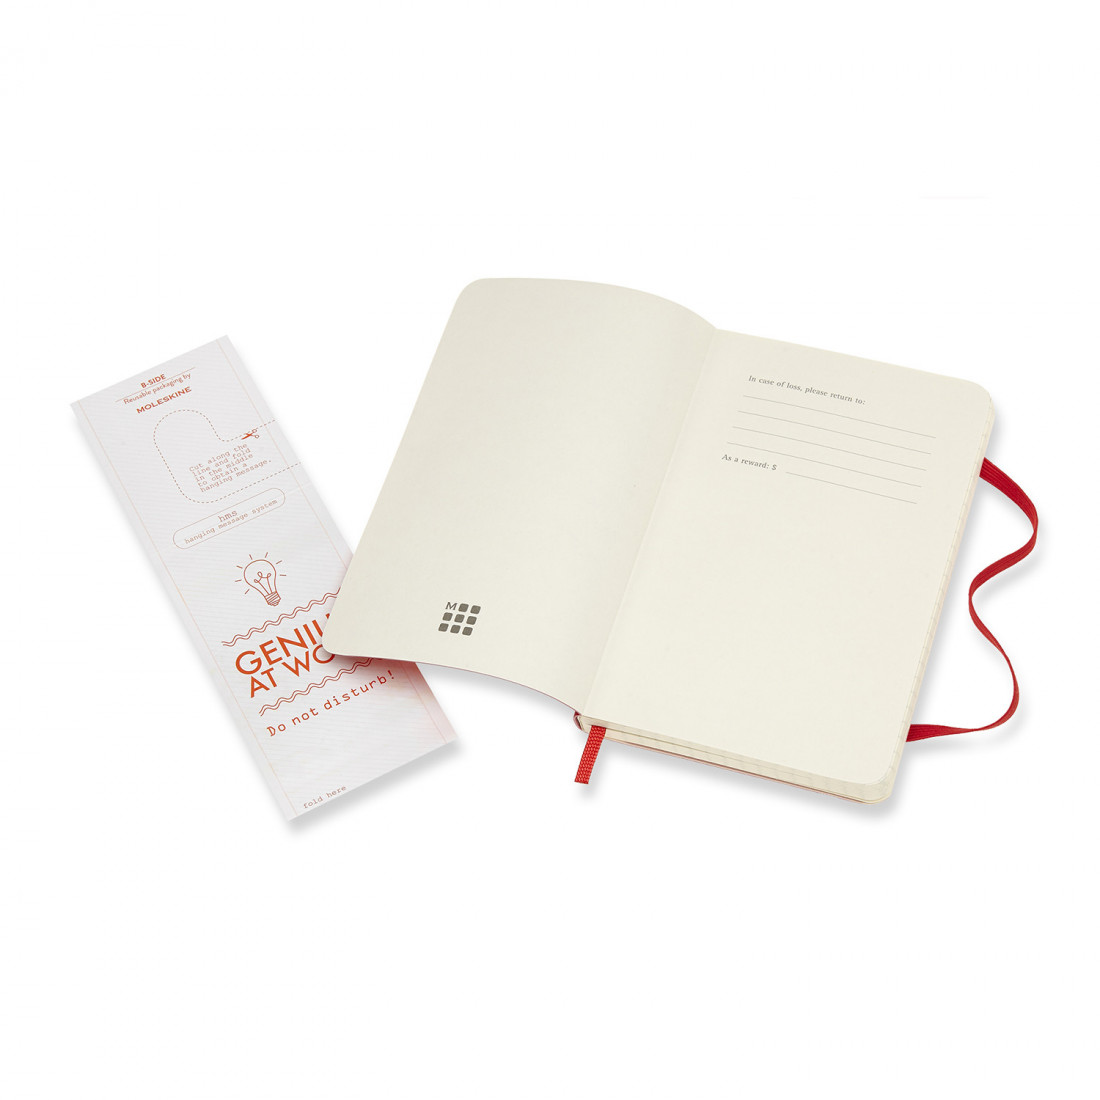 Notebook Pocket 9x14 Squared Scarlet Red Soft Cover Moleskine